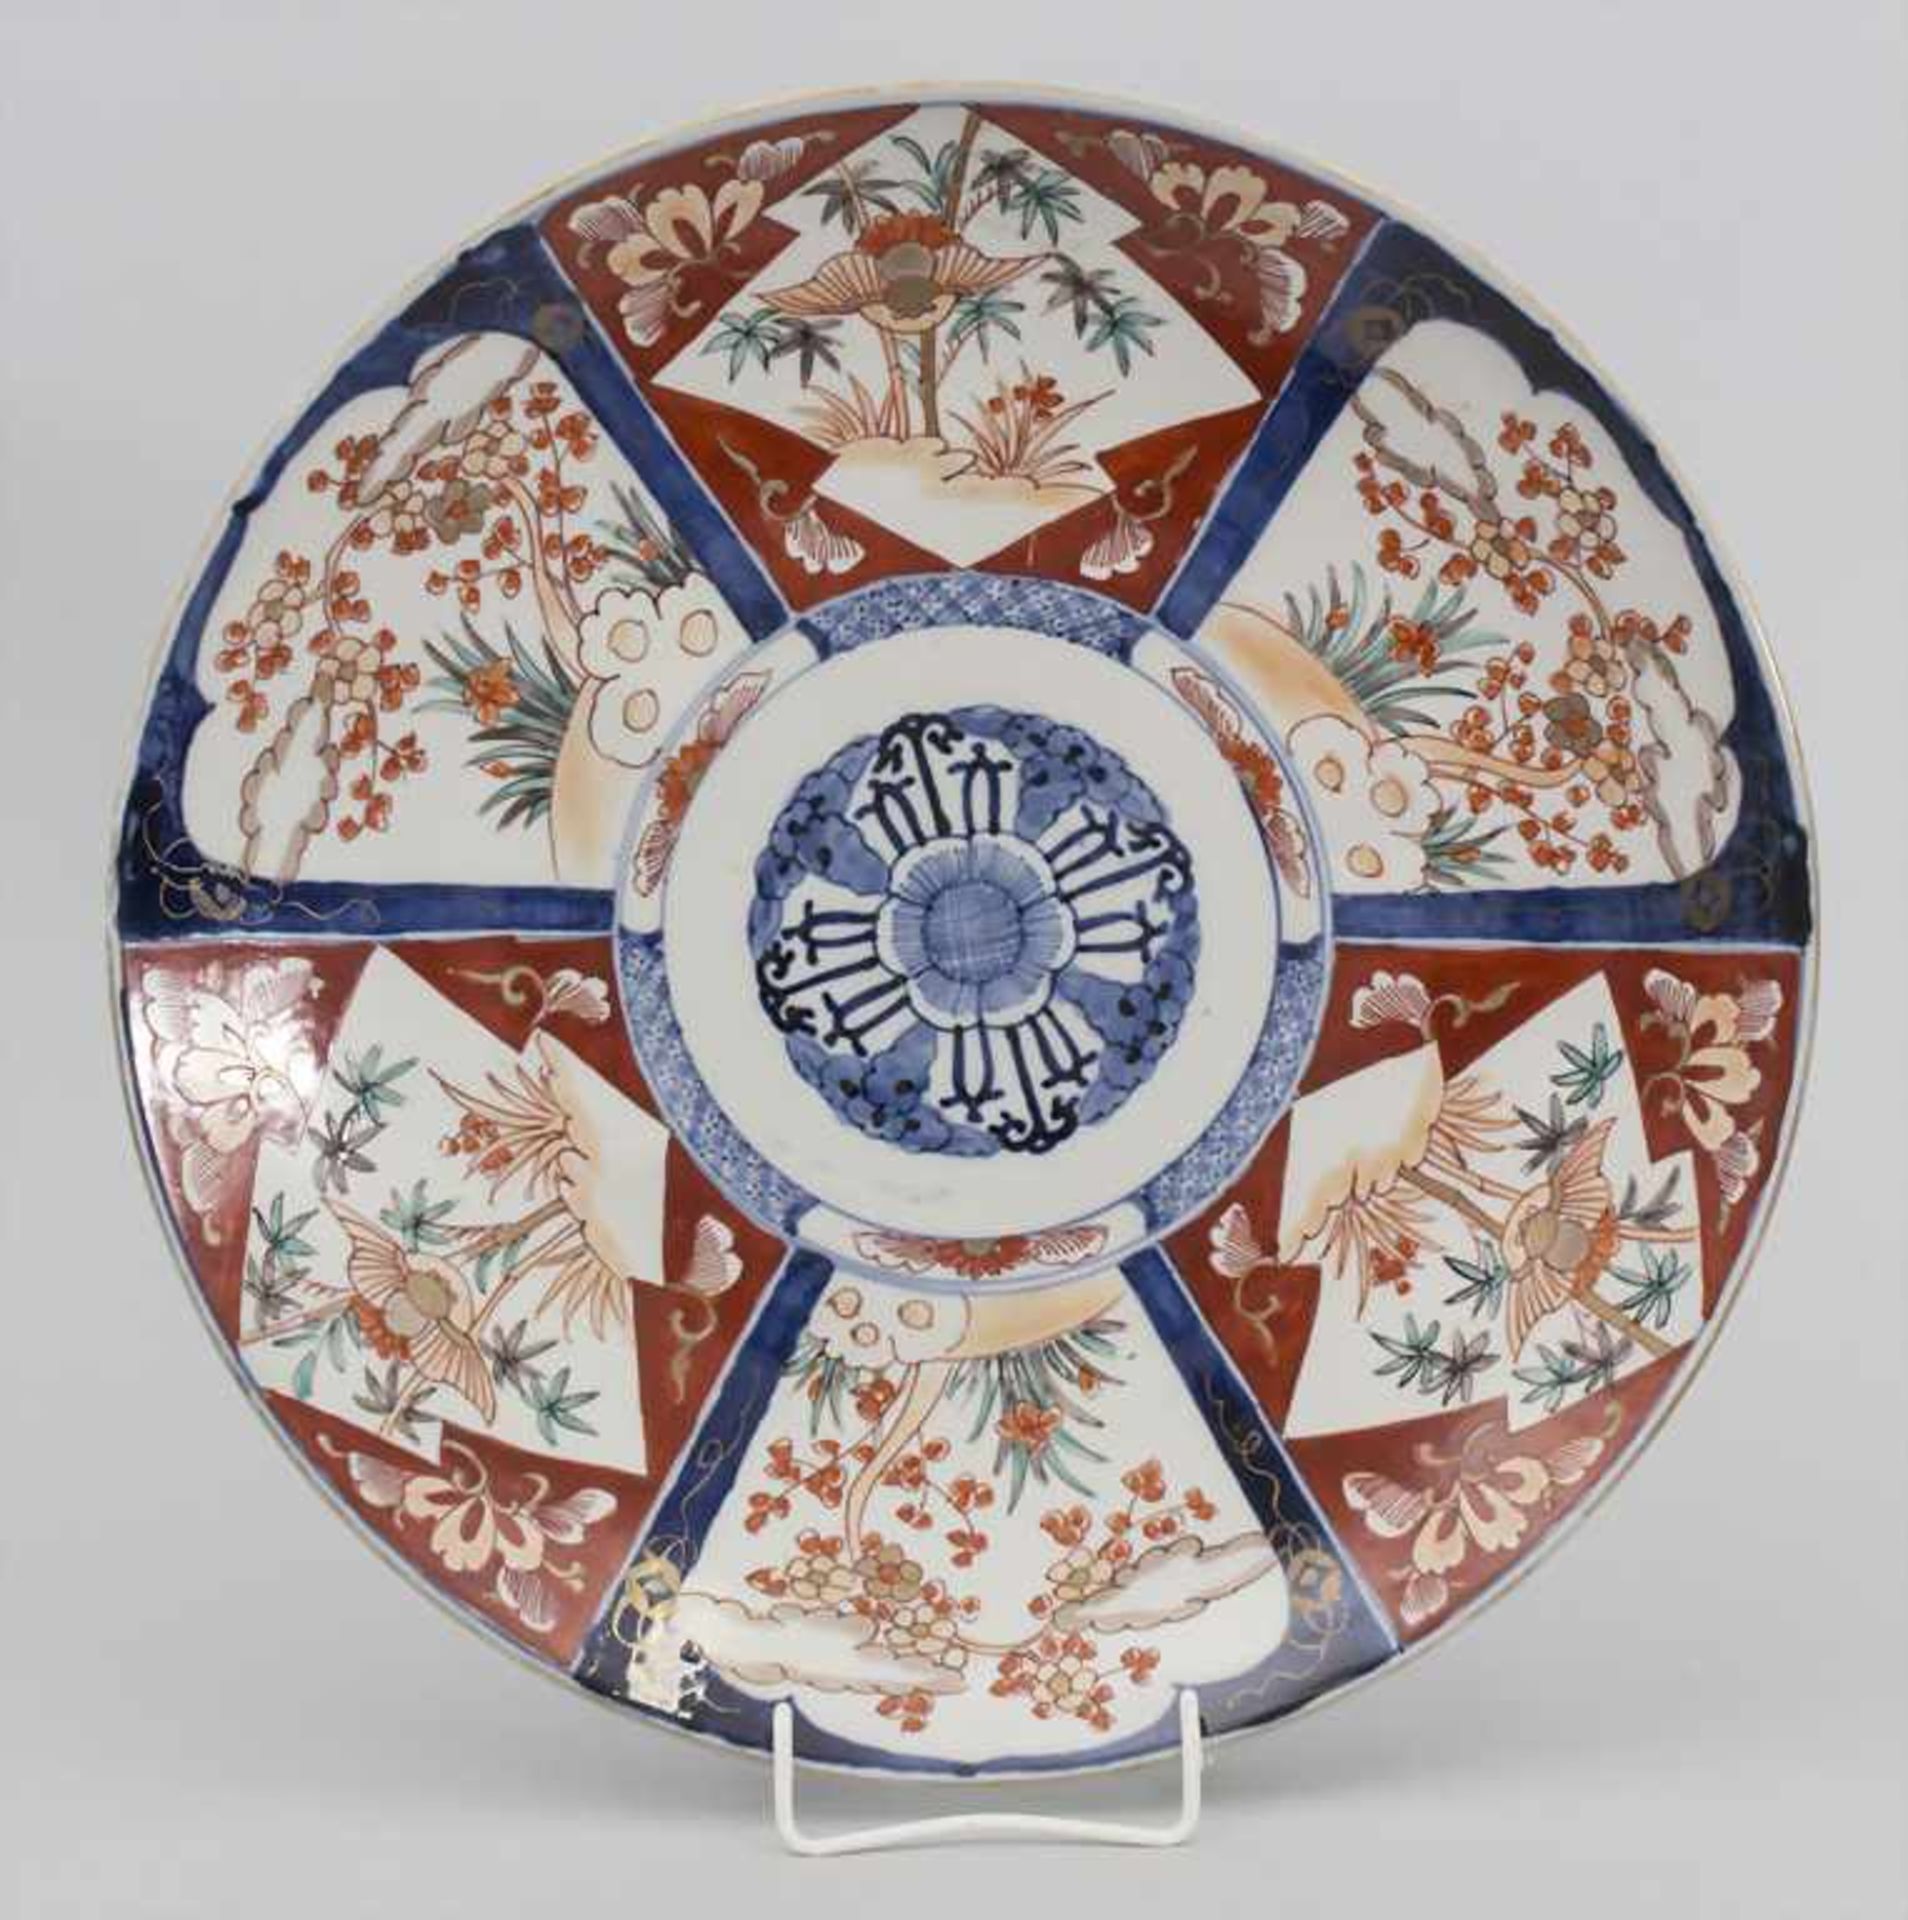 Wandteller mit Imaridekor / A wall plate with Imari patterns, China, um 1900